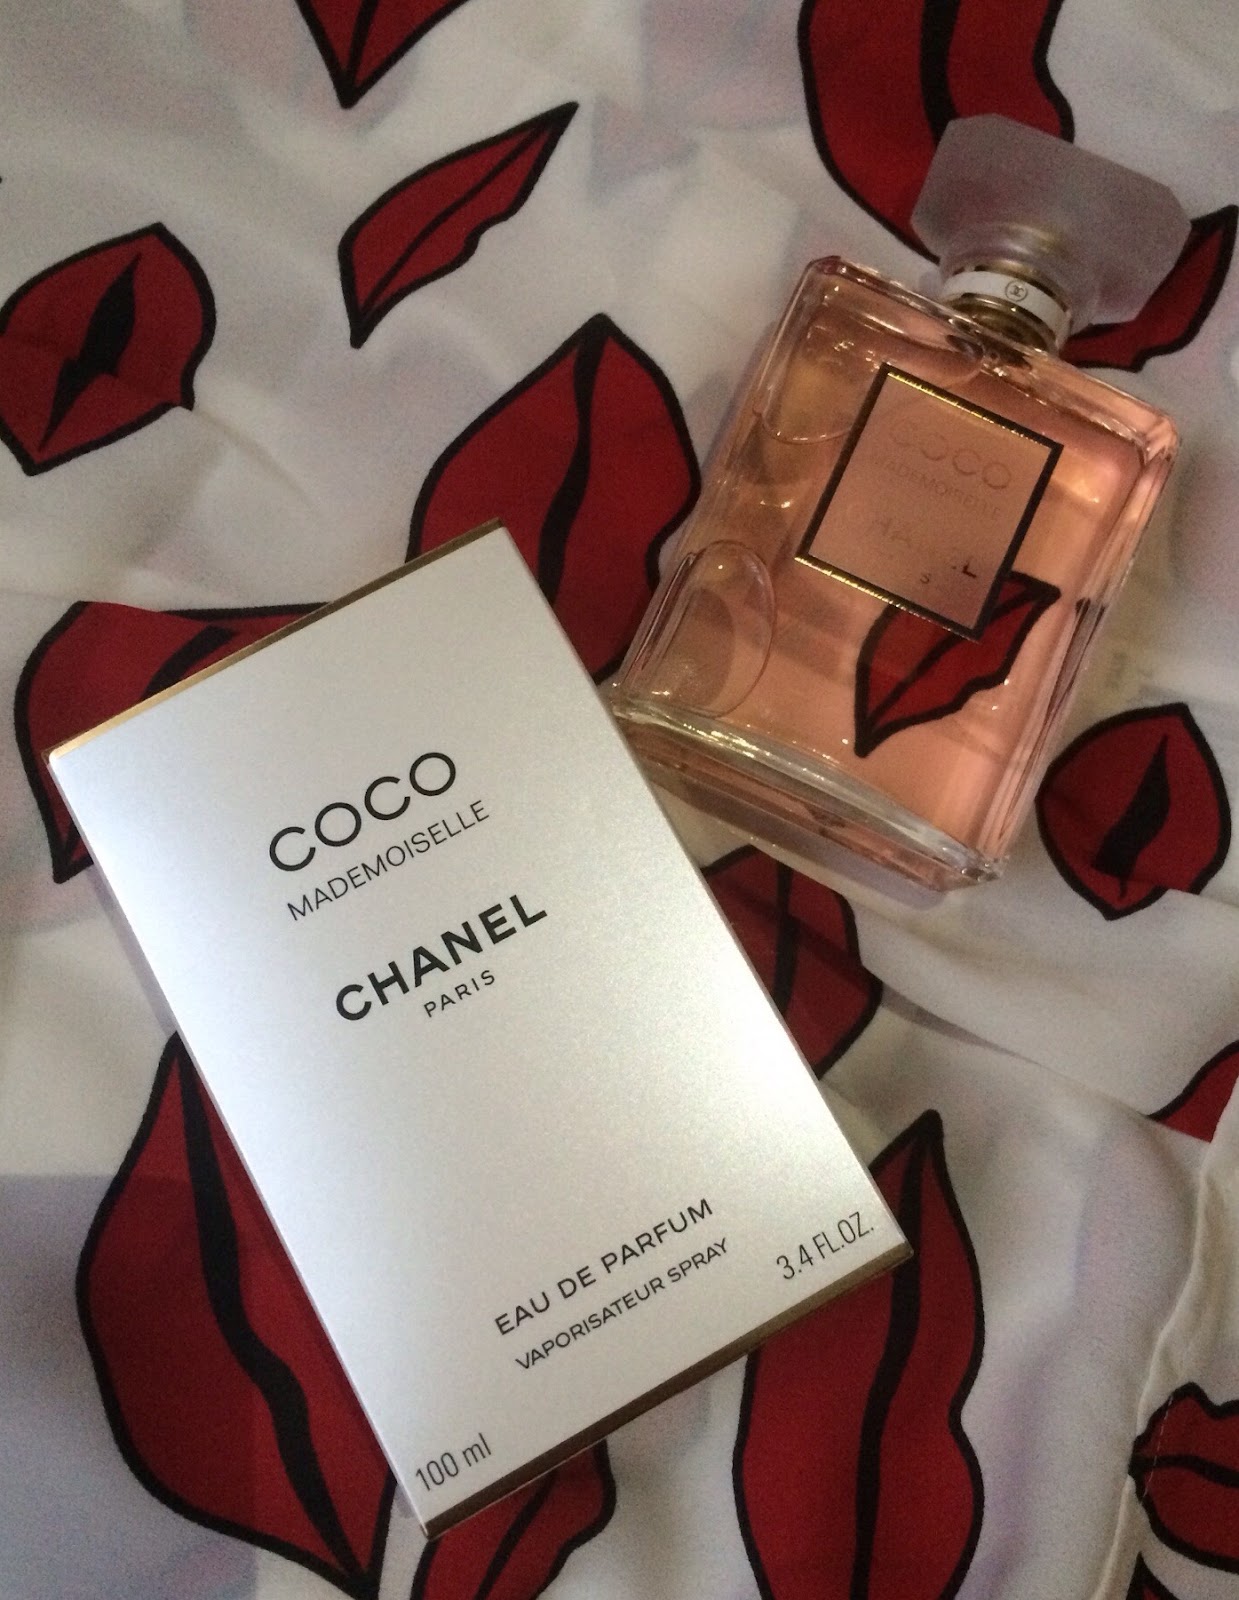 Chanel Coco Mademoiselle Eau De Parfum Spray, 100 ml : : Beauty